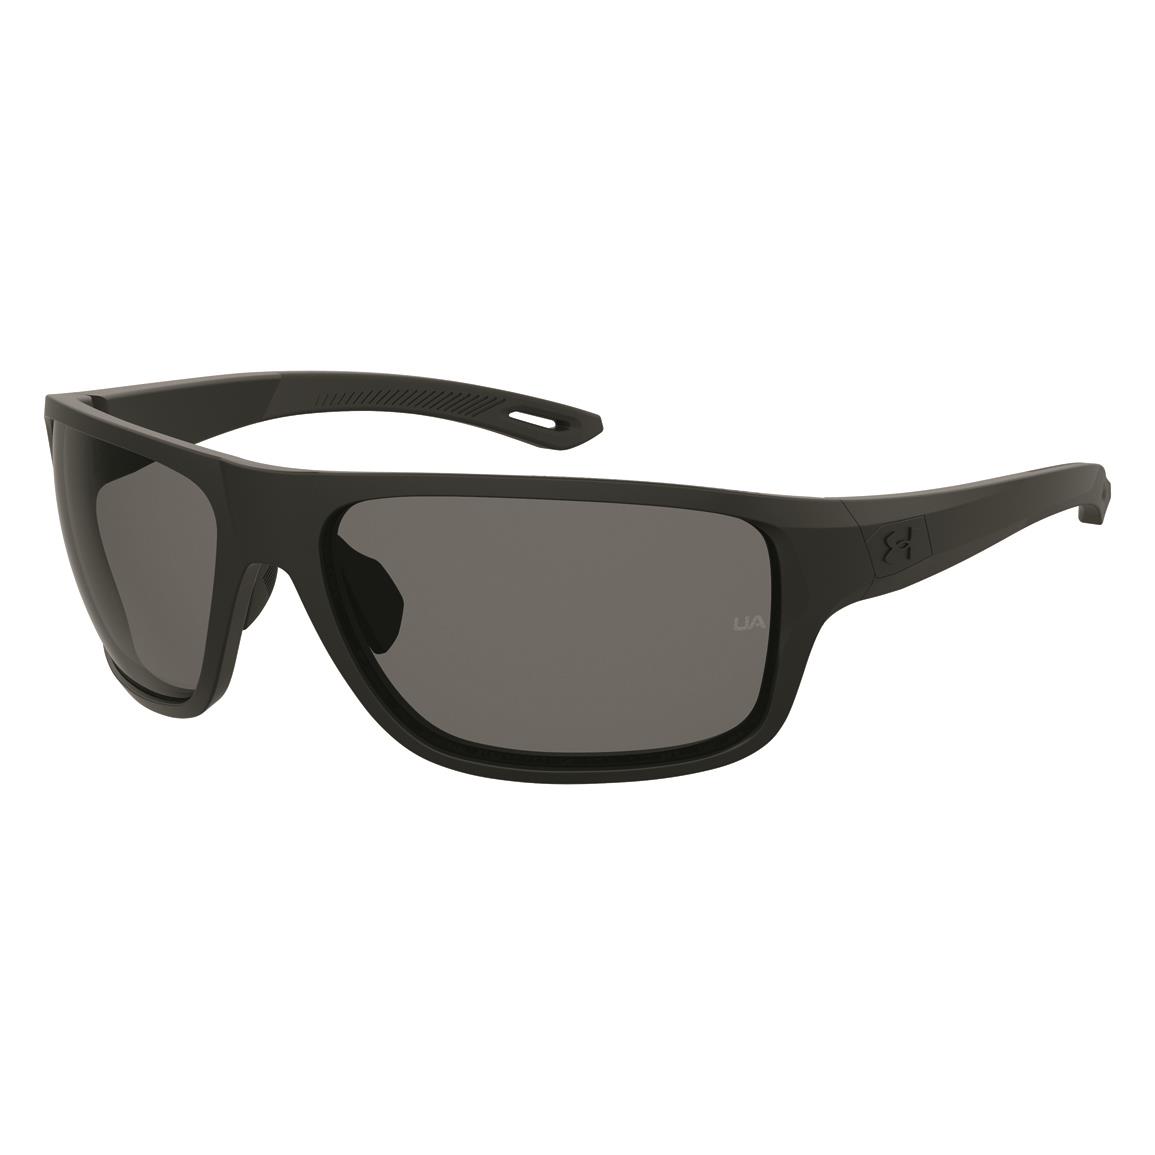 Under Armour Battle Polarized Sunglasses, Matte Black/gray Polarized